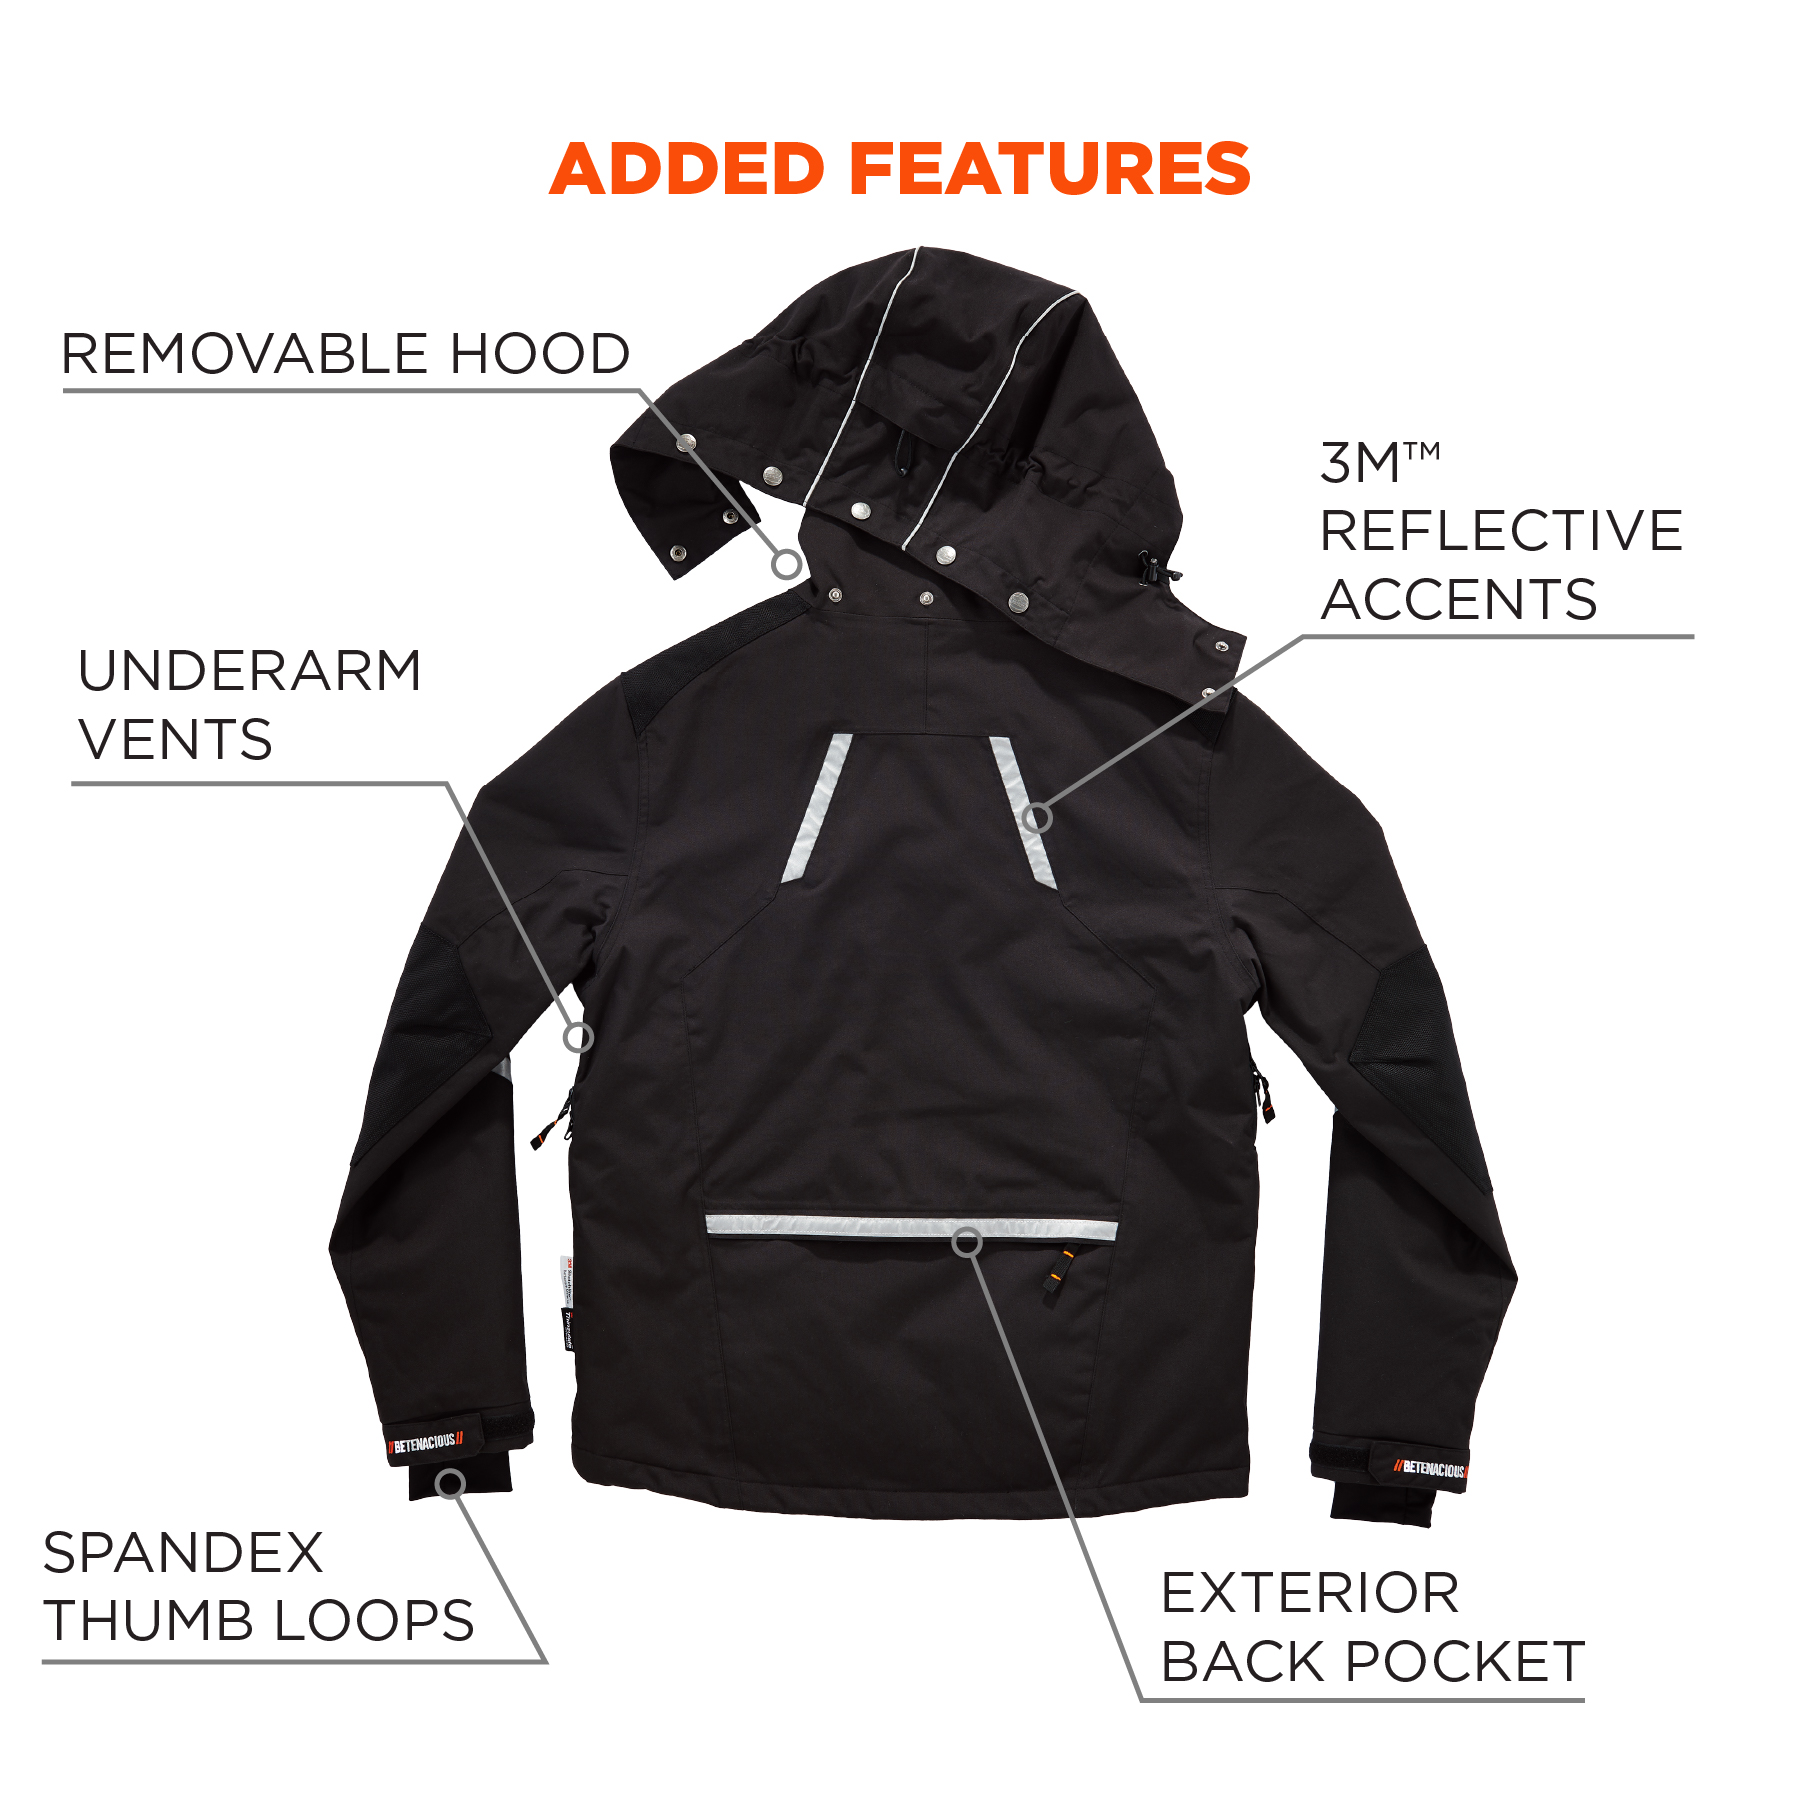 https://www.ergodyne.com/sites/default/files/product-images/41112-6466-winter-work-jacket-black-added-features.jpg